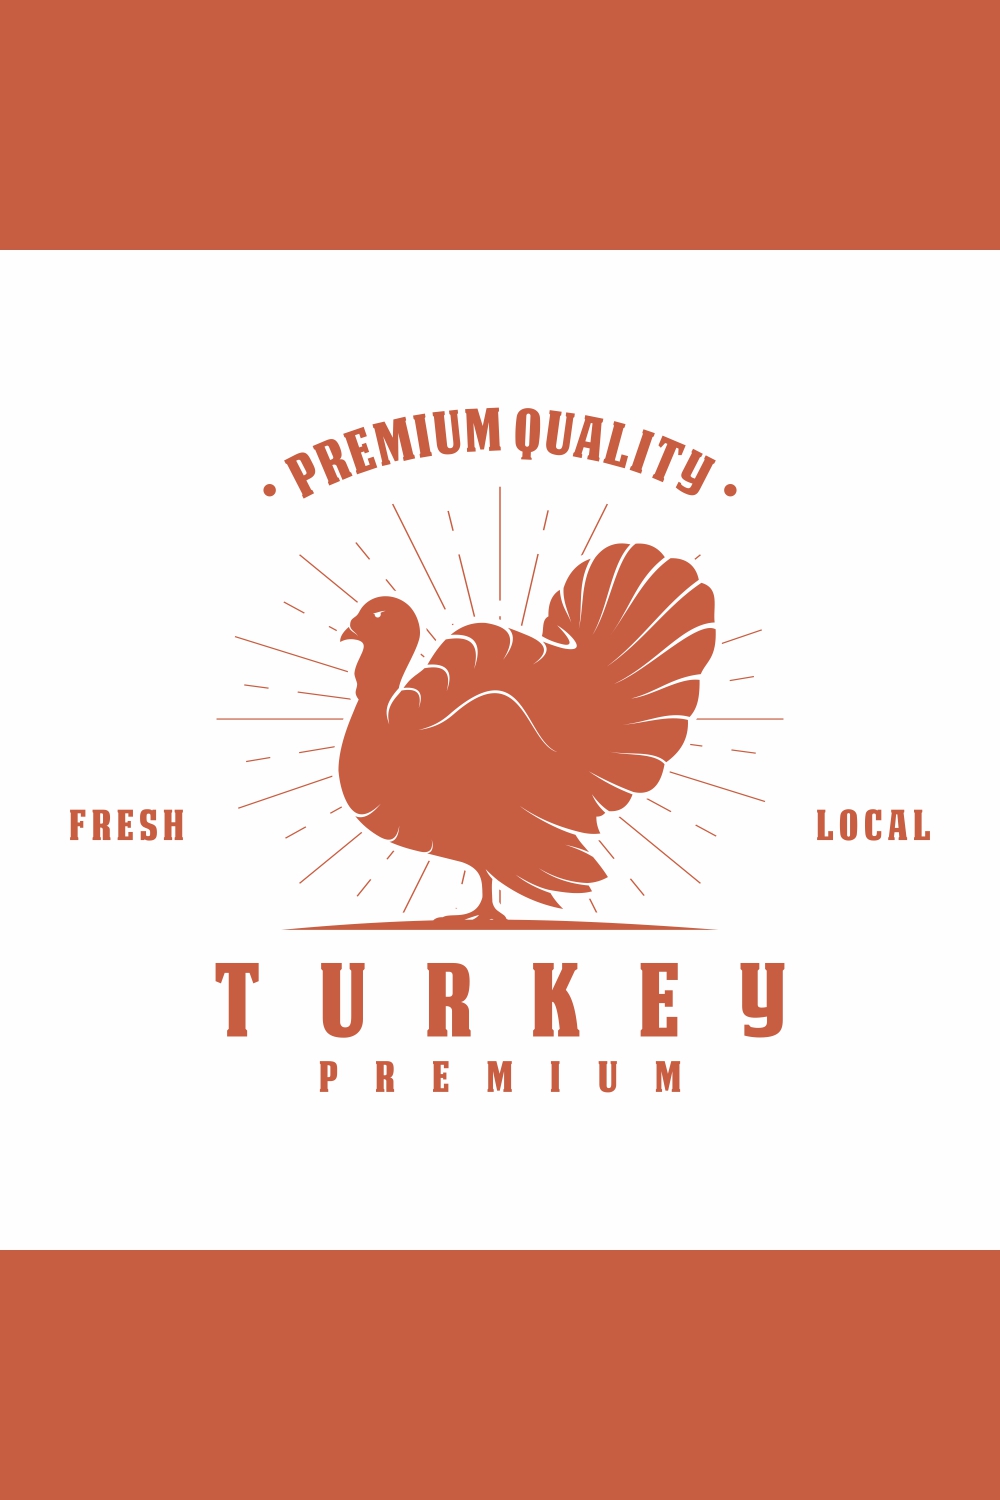 Turkey Farm logo design - only 5$ pinterest preview image.